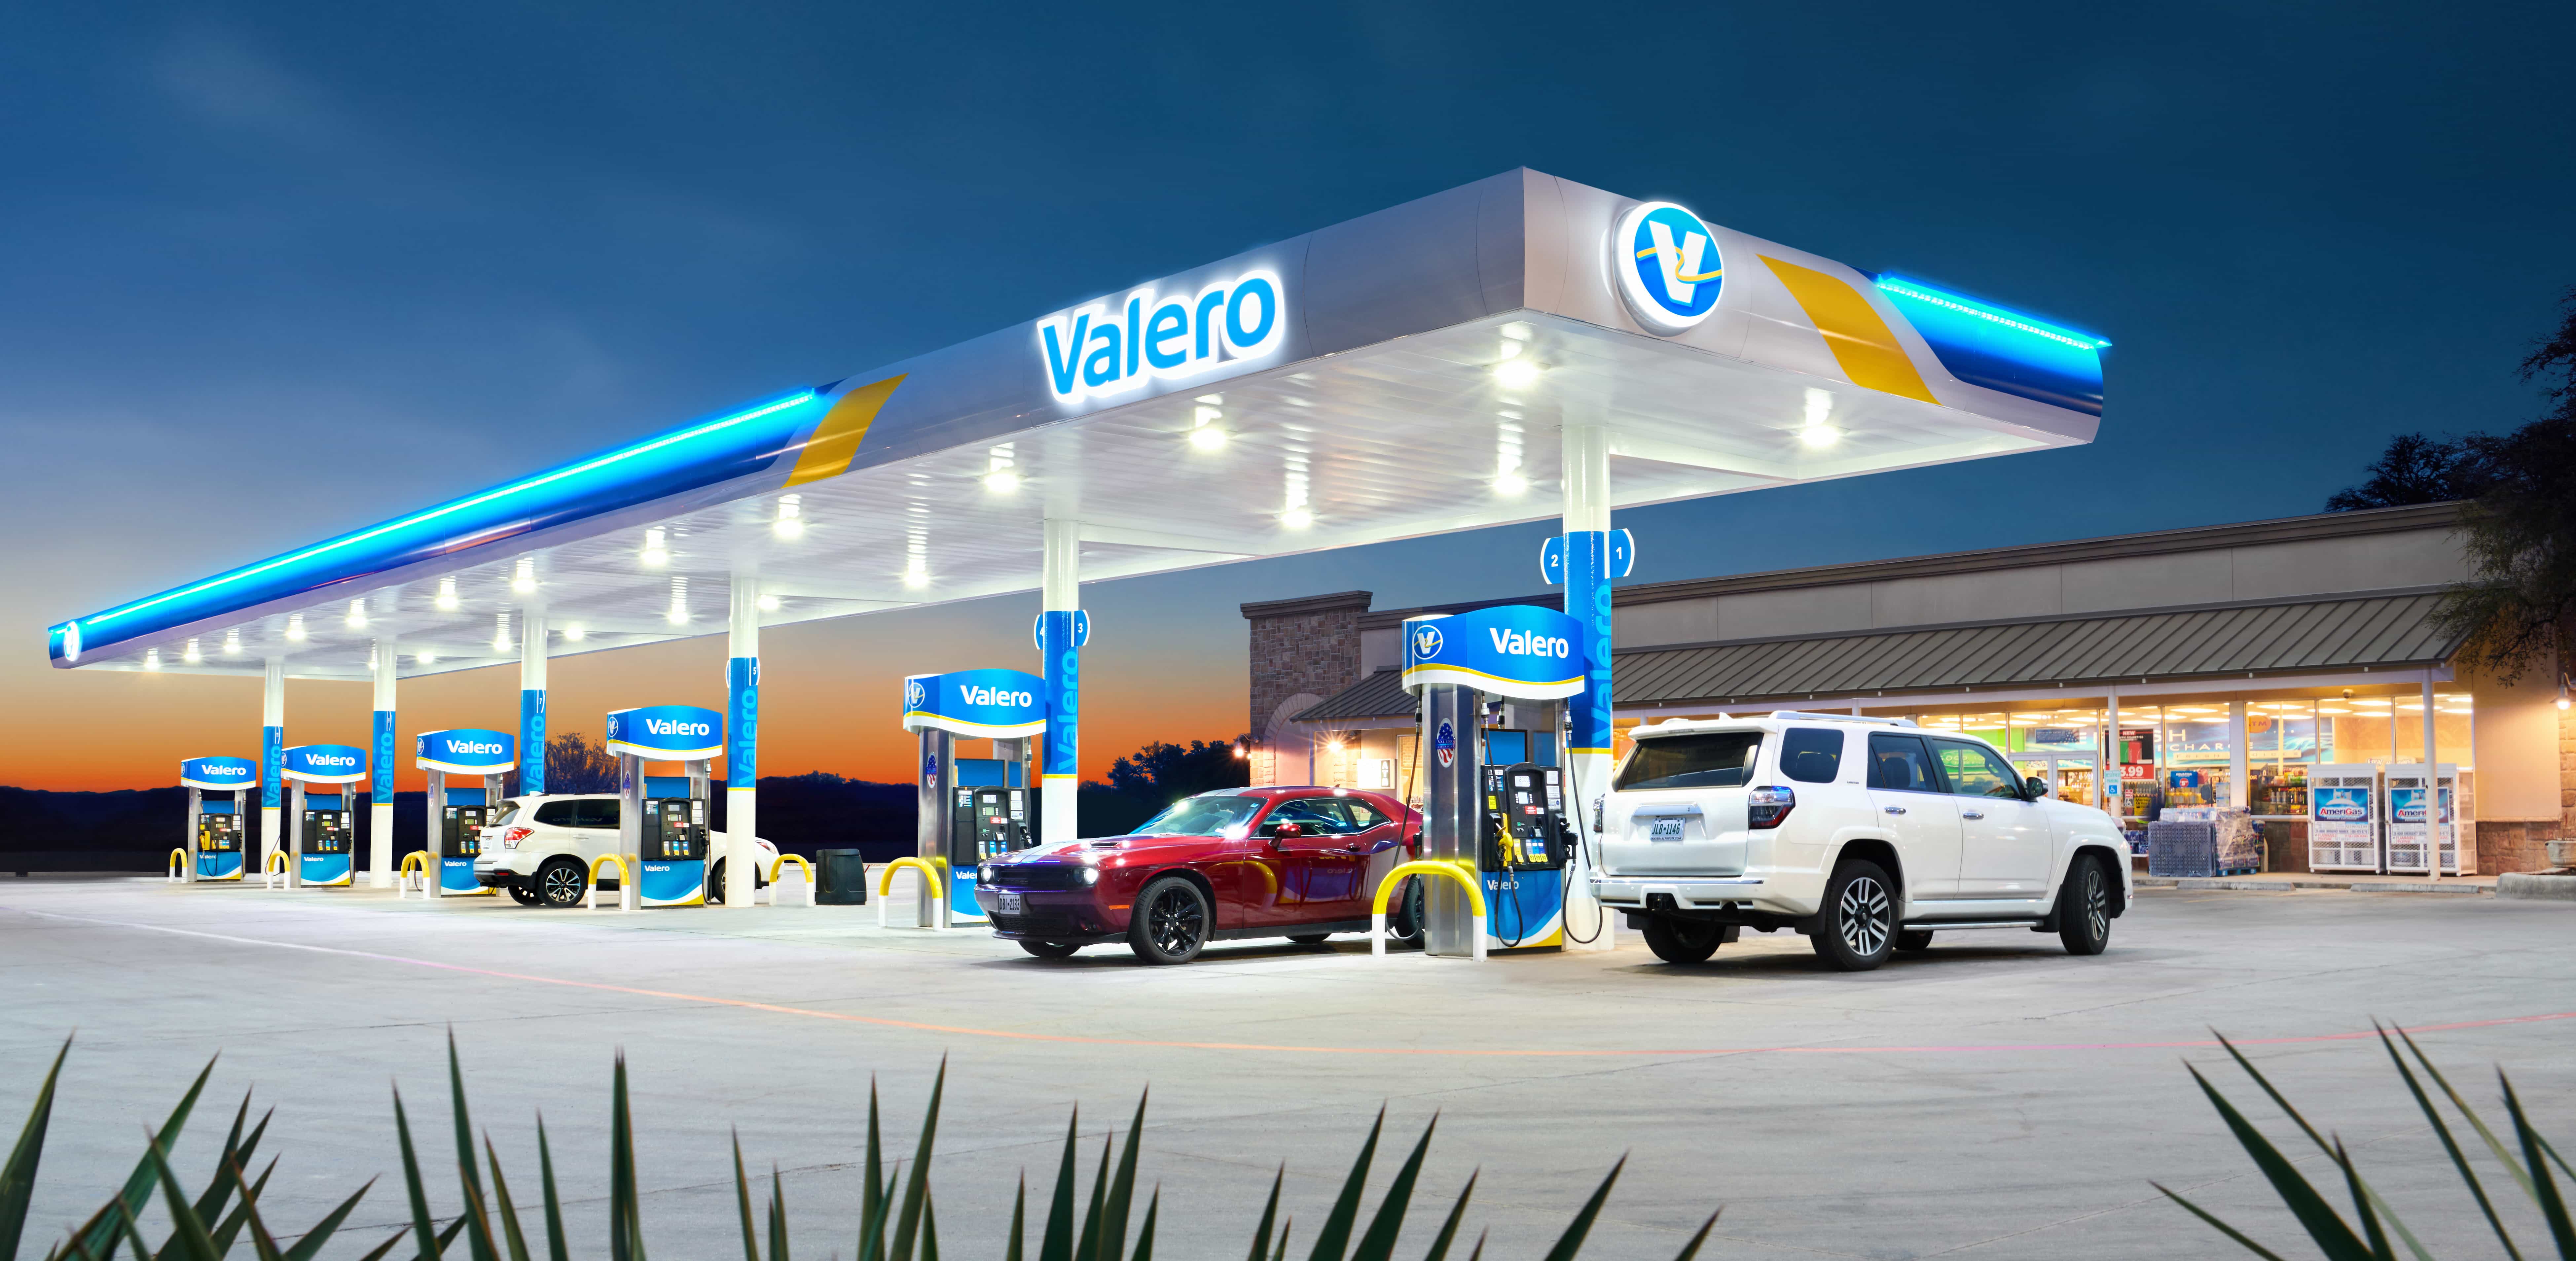 Valero Fuel - Broomfield, CO, US, 24 hour gas station